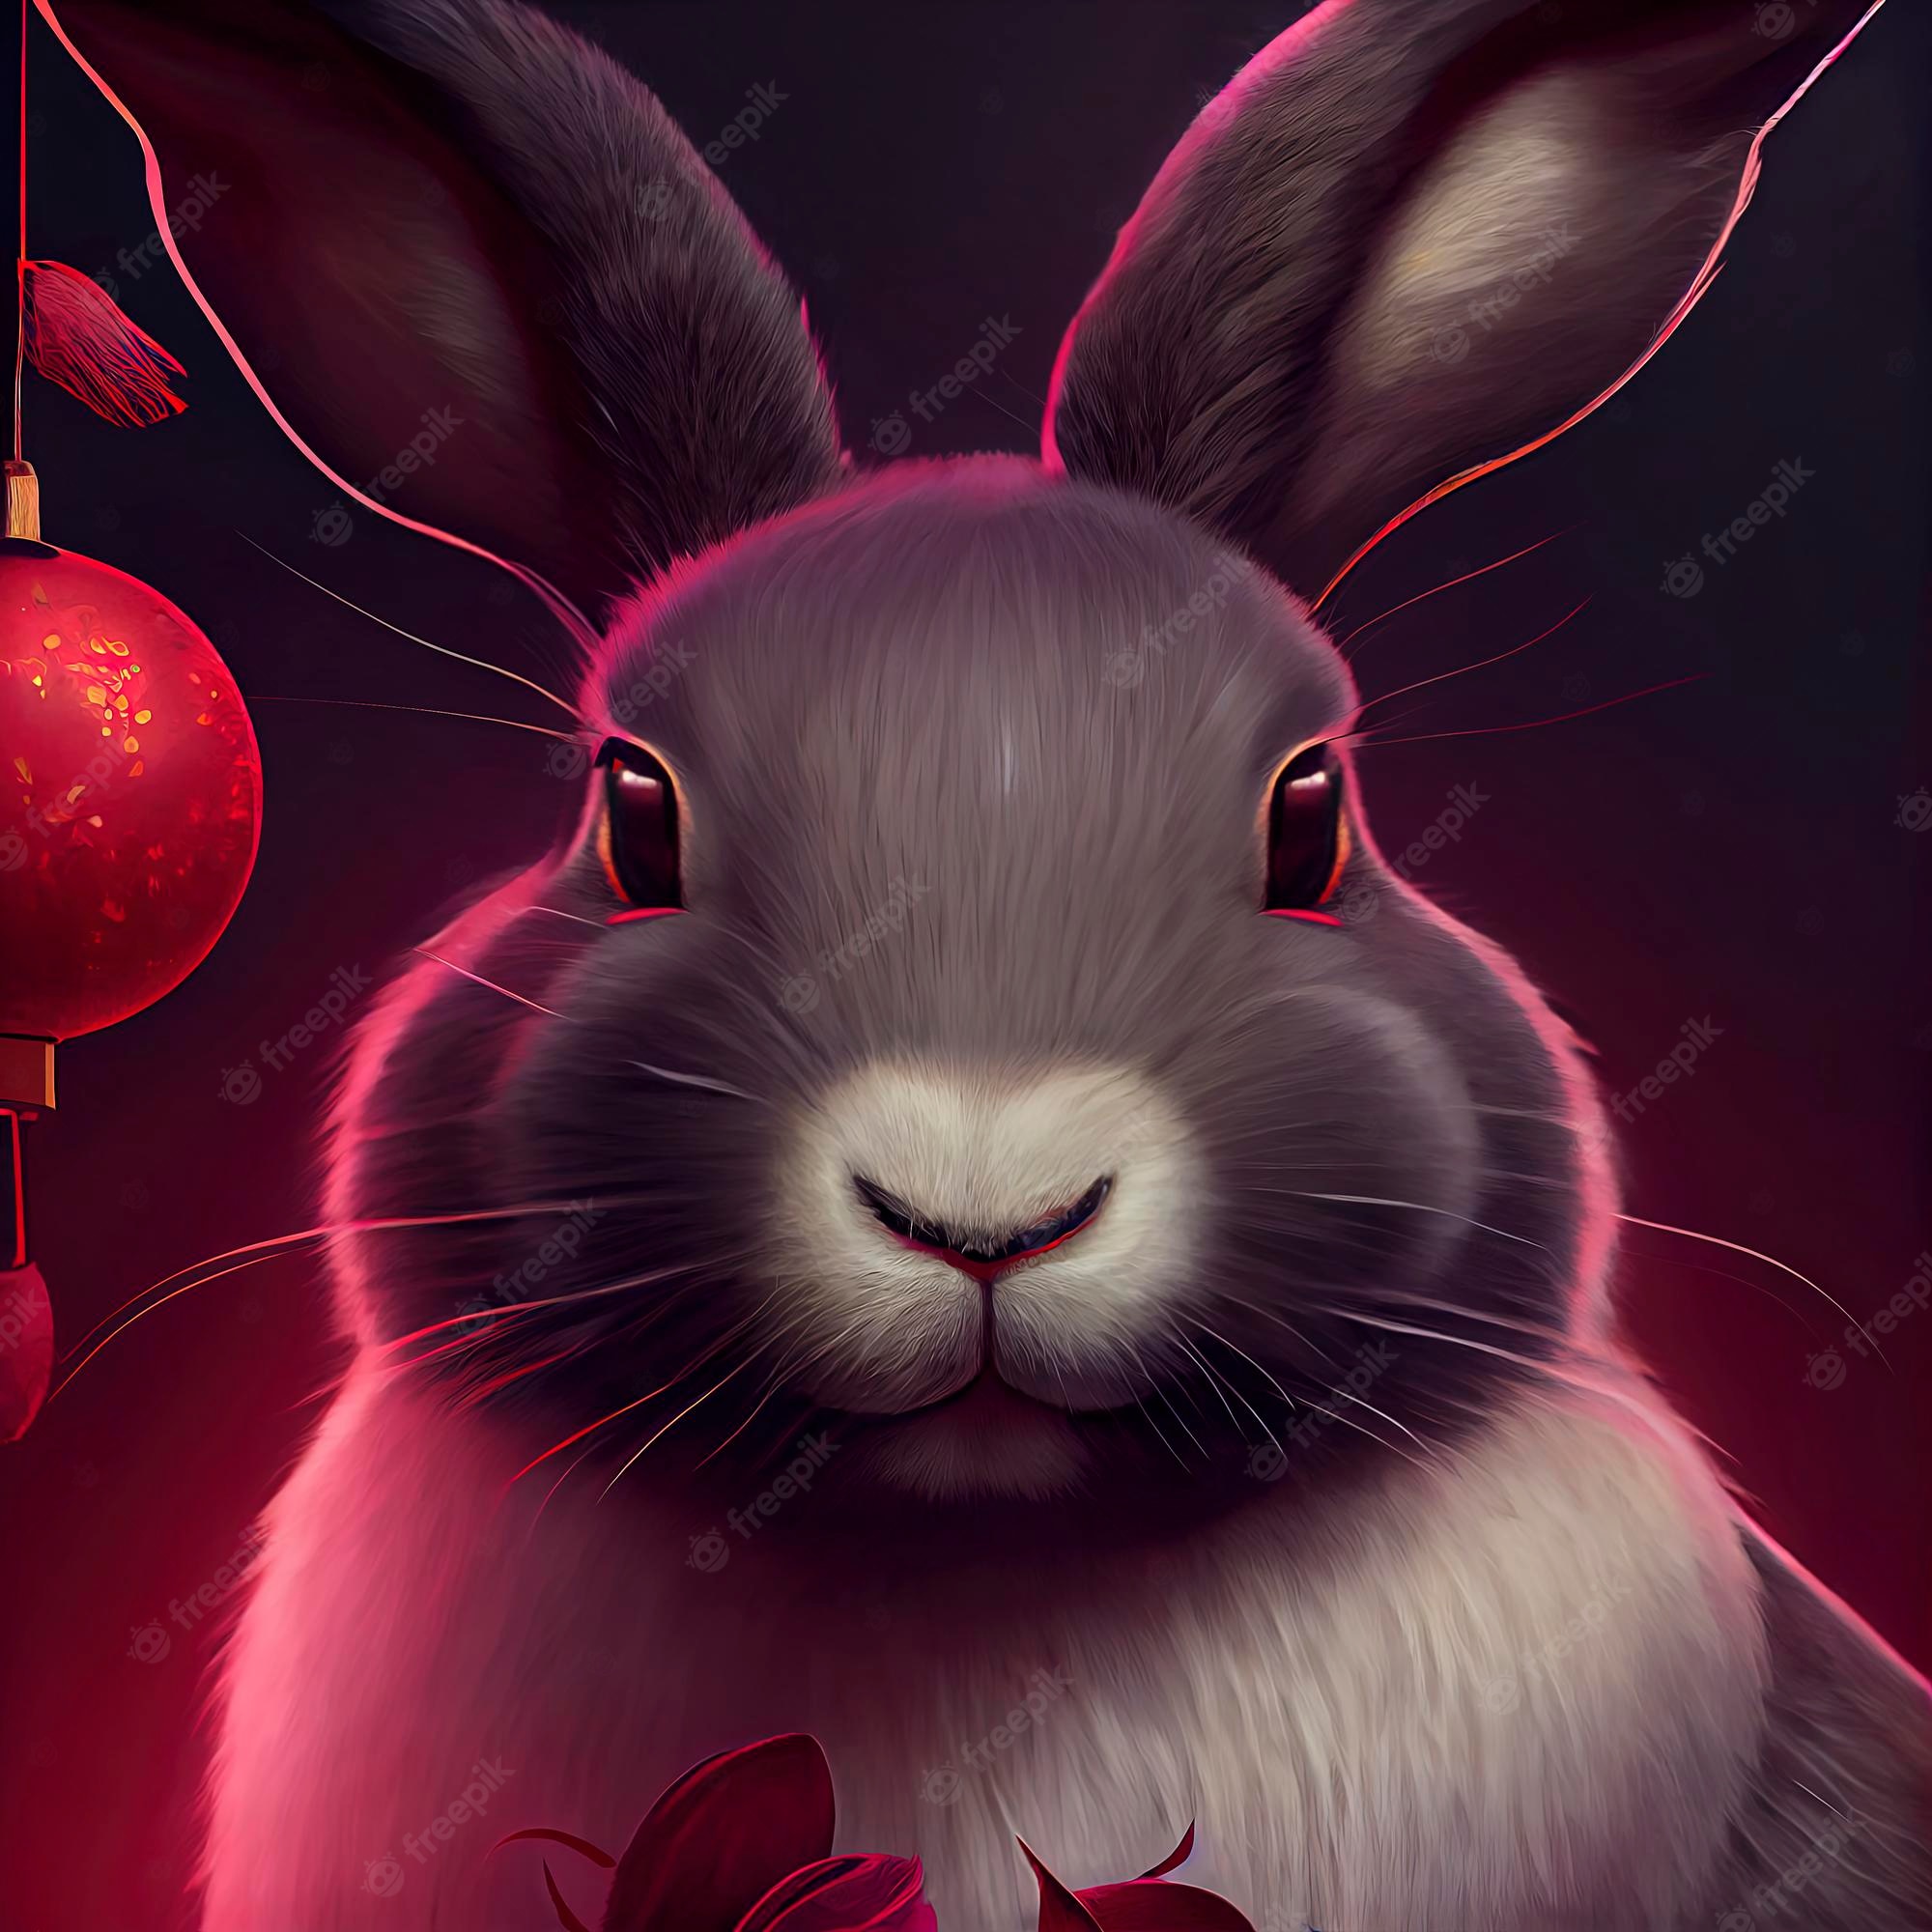 Premium Photo. Chinese new year 2023 year of the zodiac sign rabbit illustration